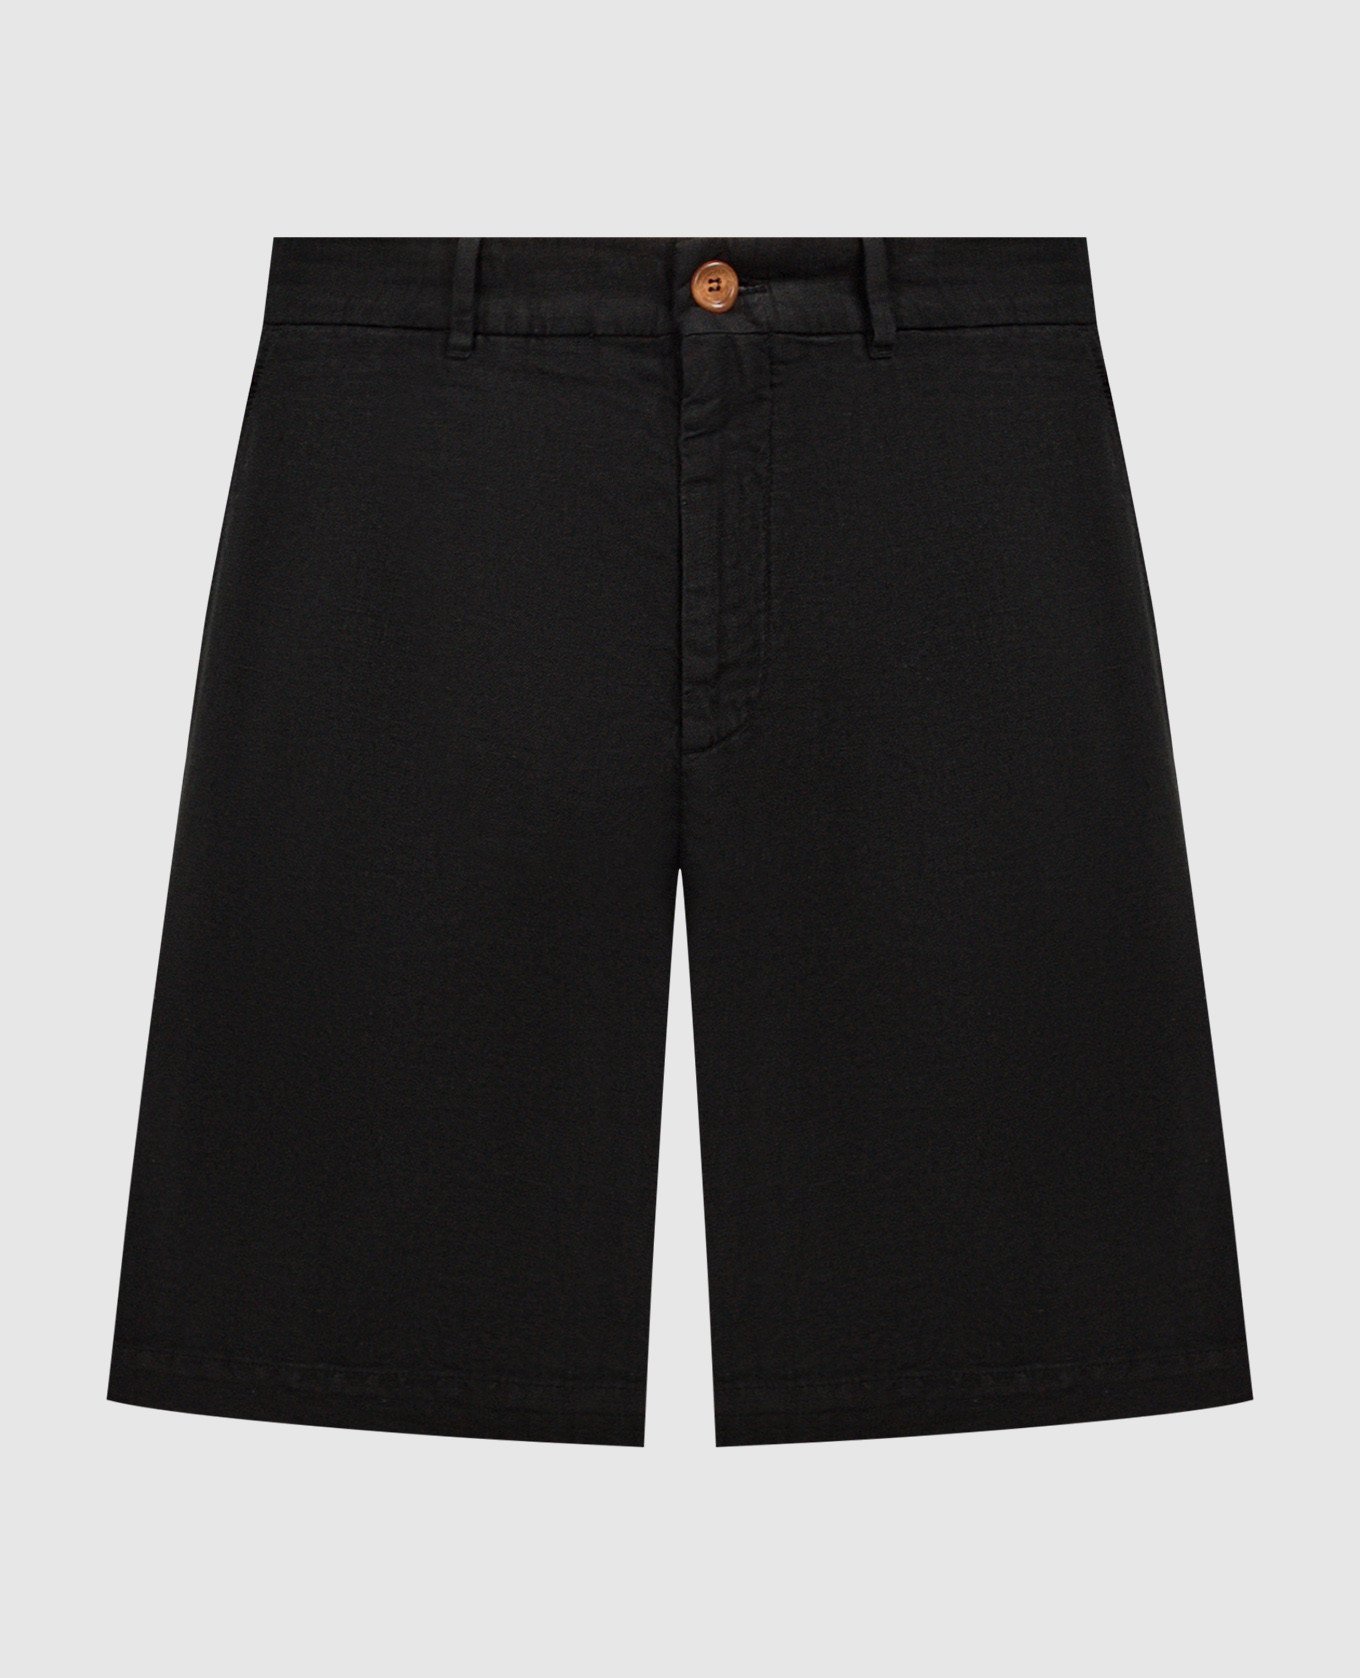 Black linen shorts